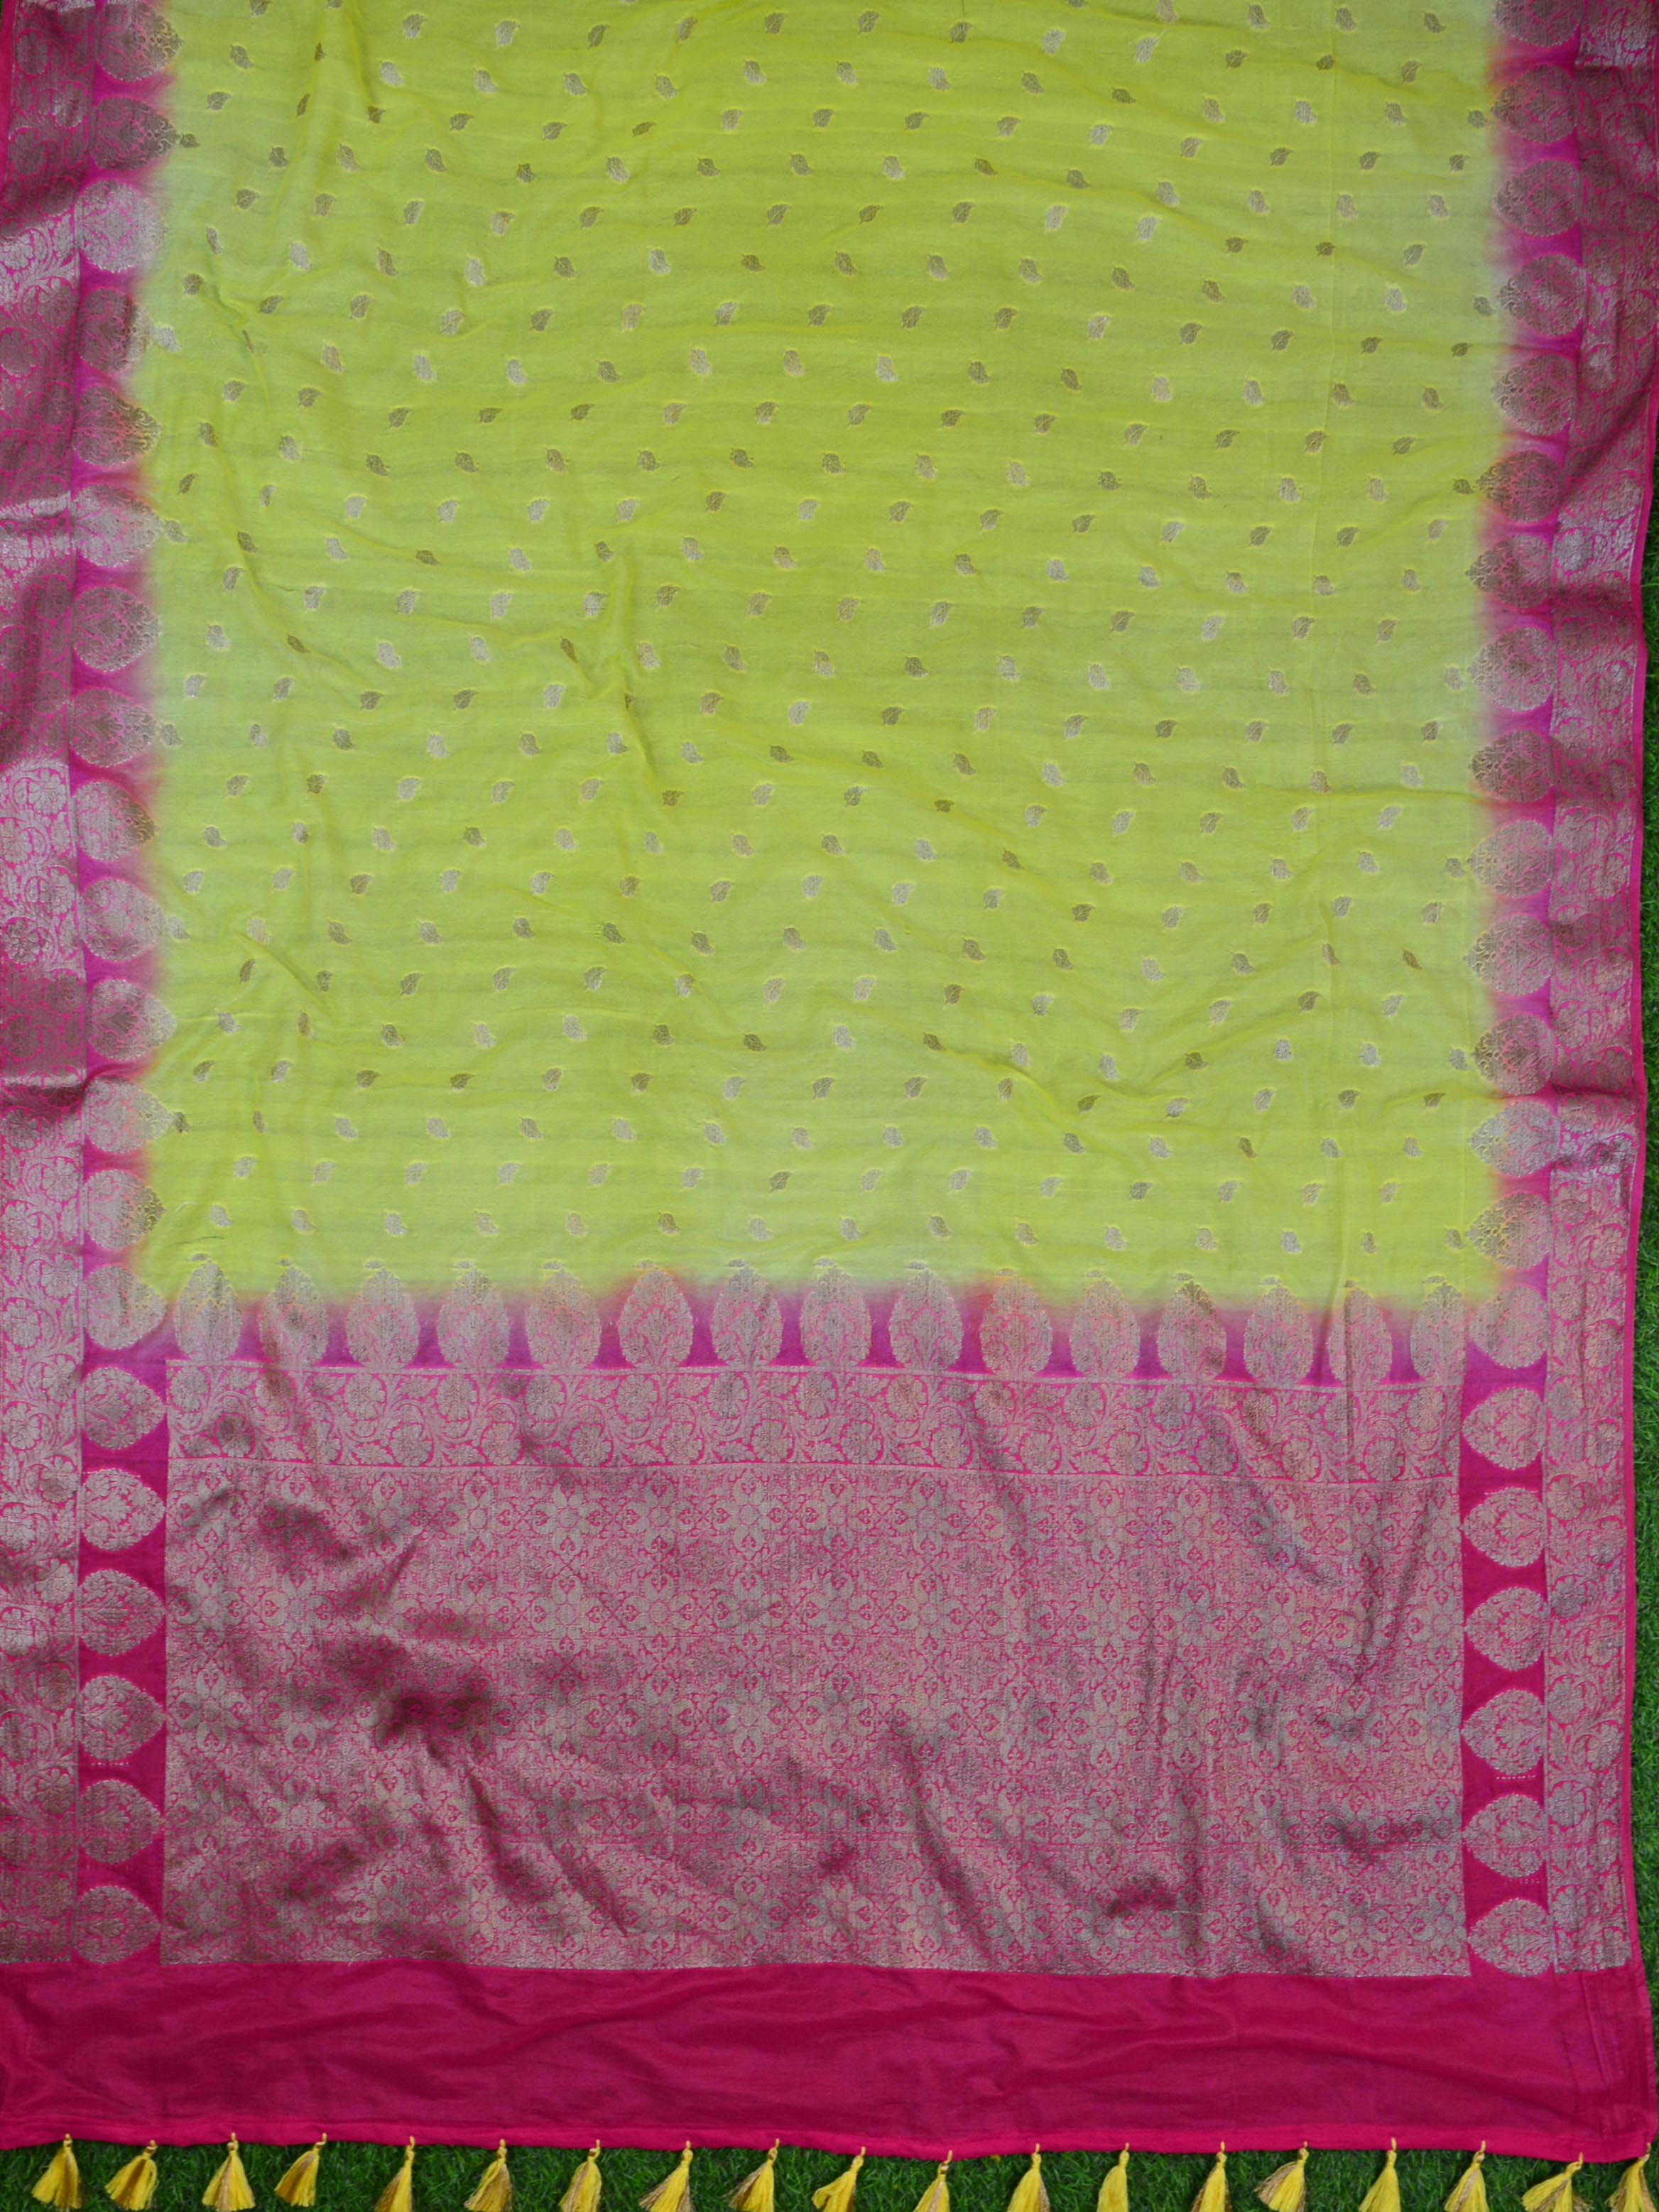 Banarasee Handwoven Semi-Chiffon Sari With Buta Design-Yellow With Pink